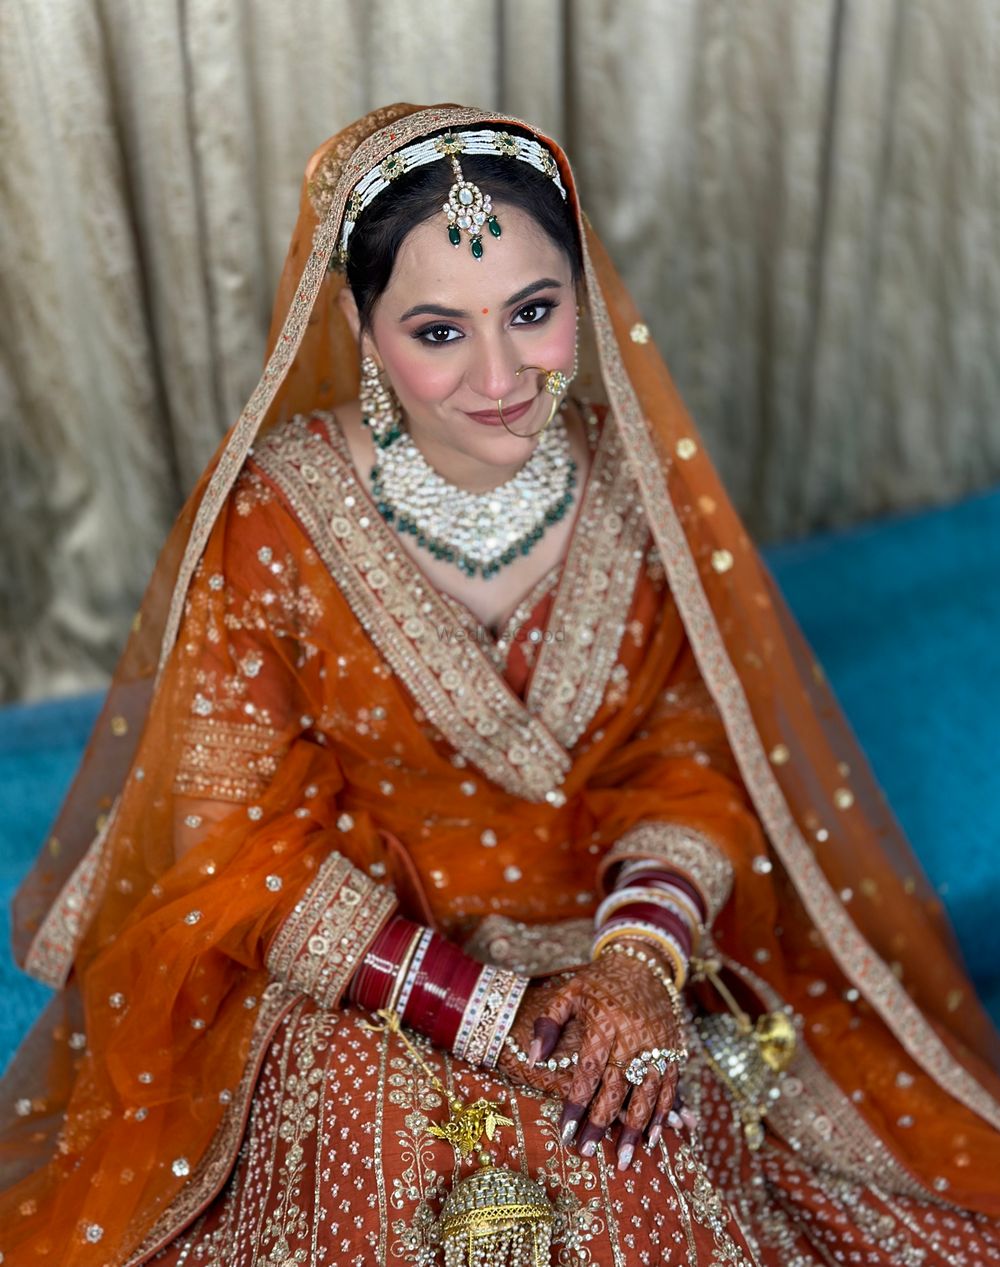 Photo From Bride - By Isha Rajpal MUA